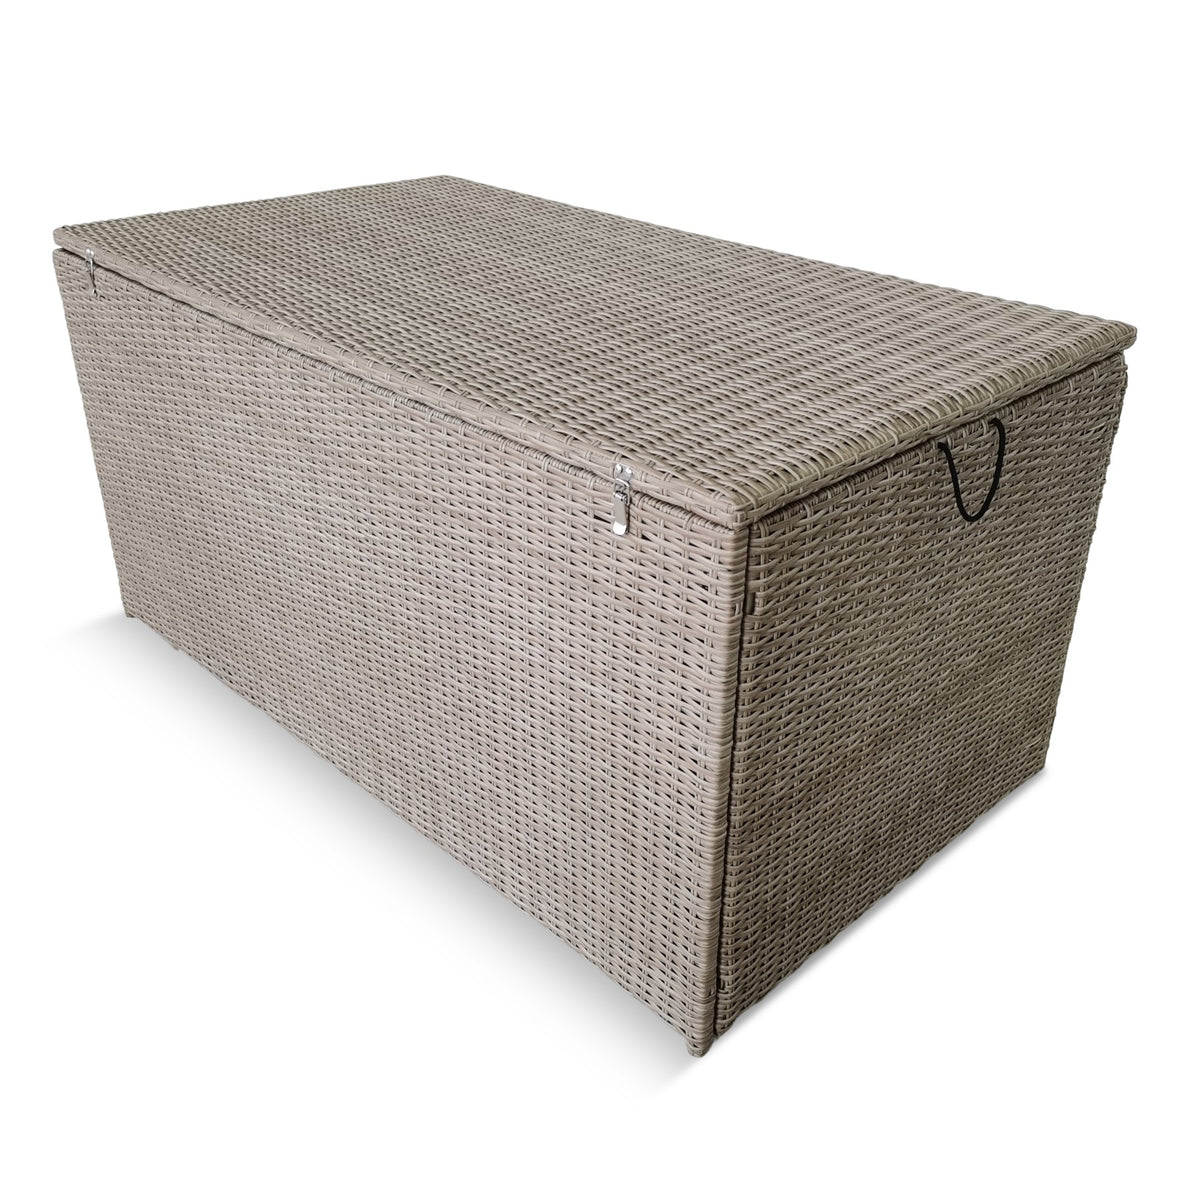 LG Outdoors Monte Carlo Sand Cushion Storage Box